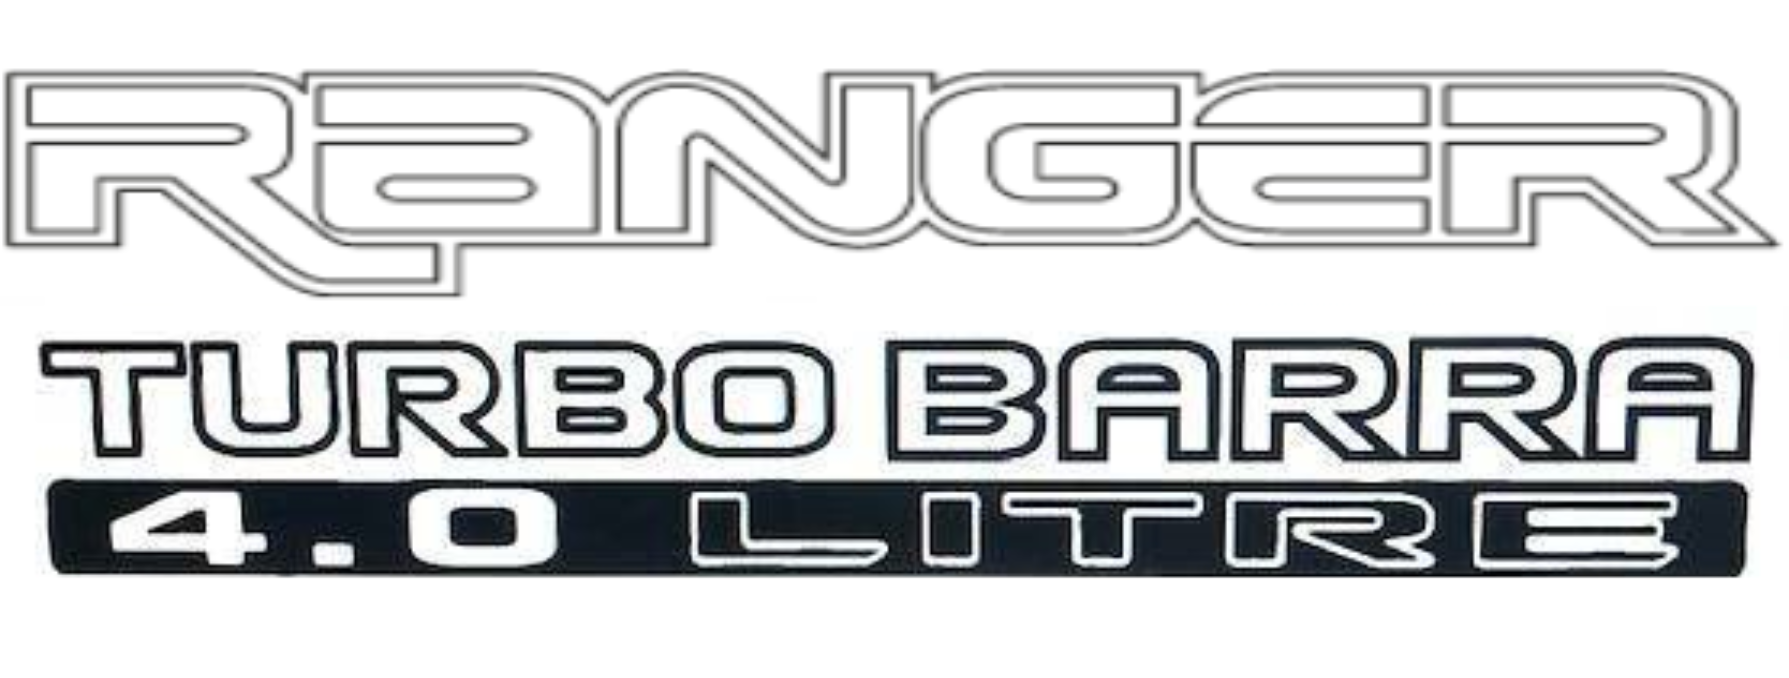 Ranger Barra Logo 2.png